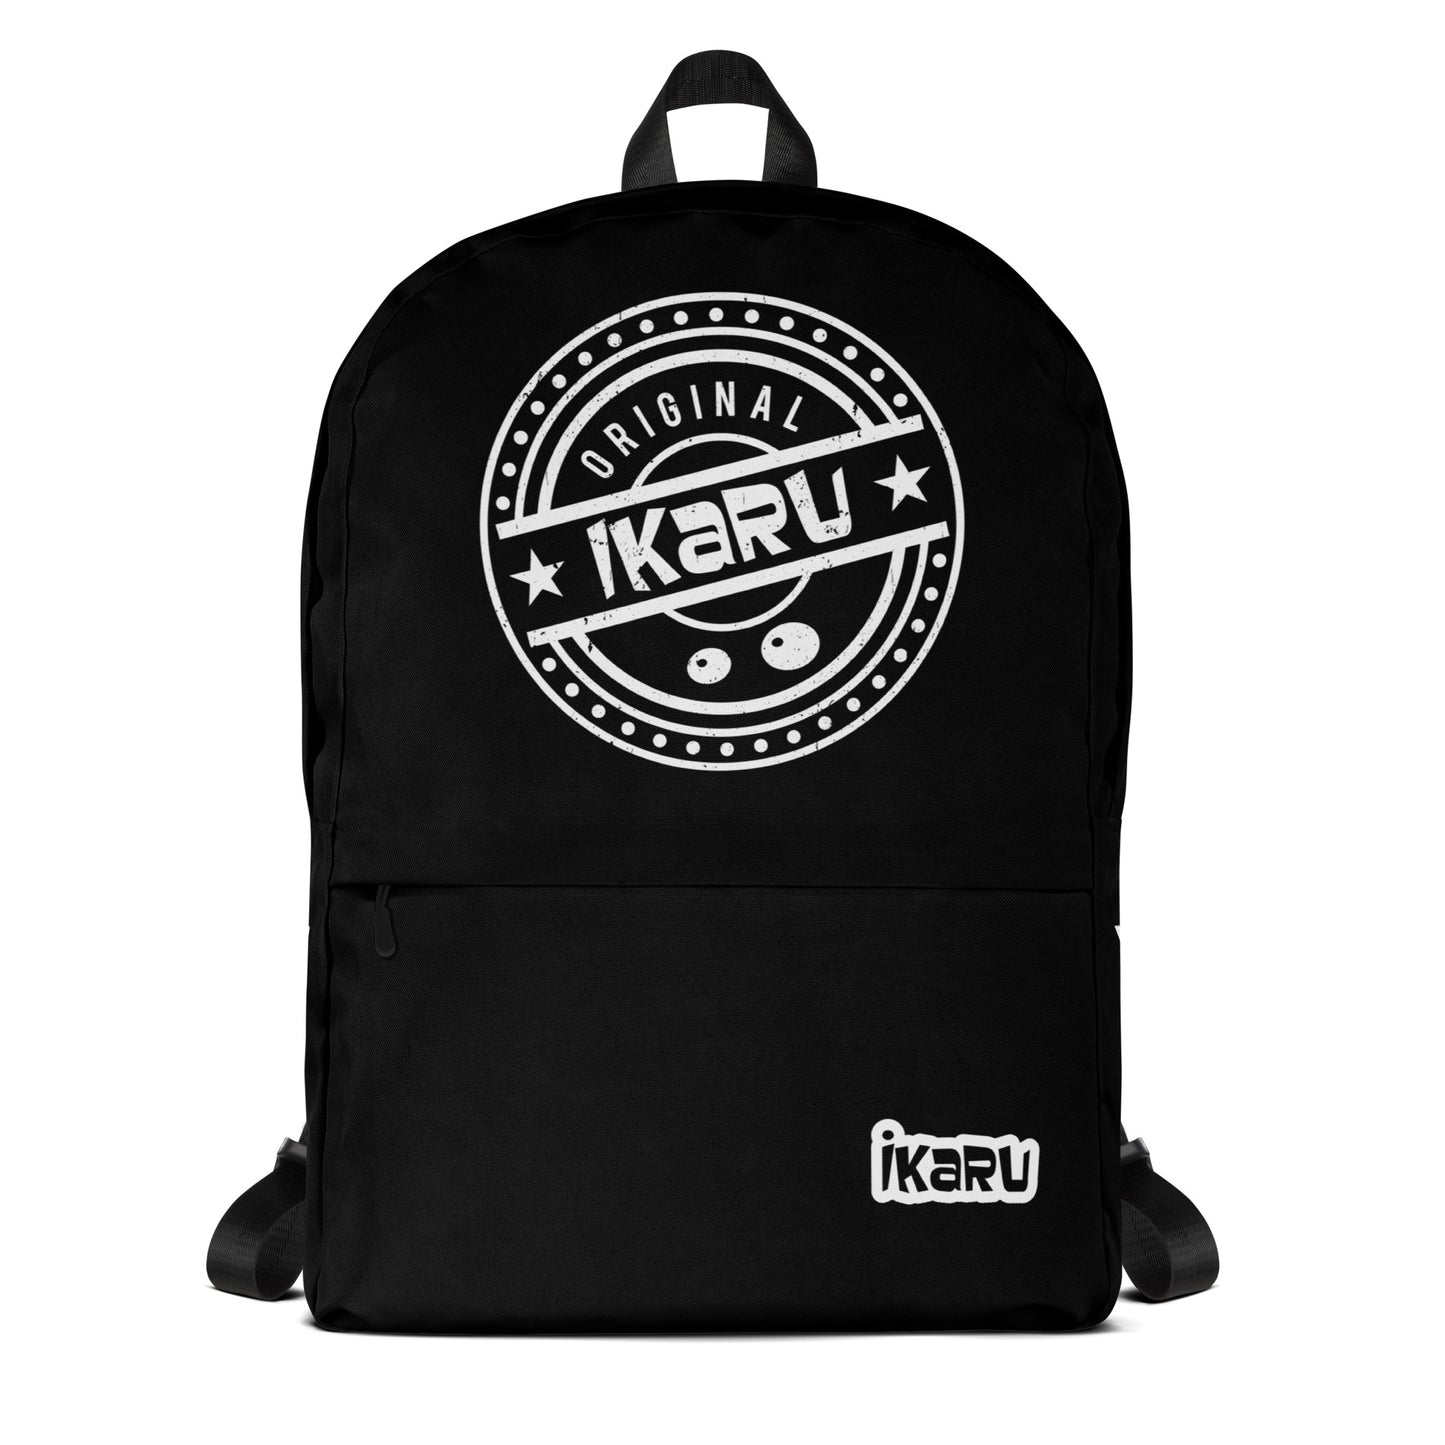 Ikaru Original (Backpack)